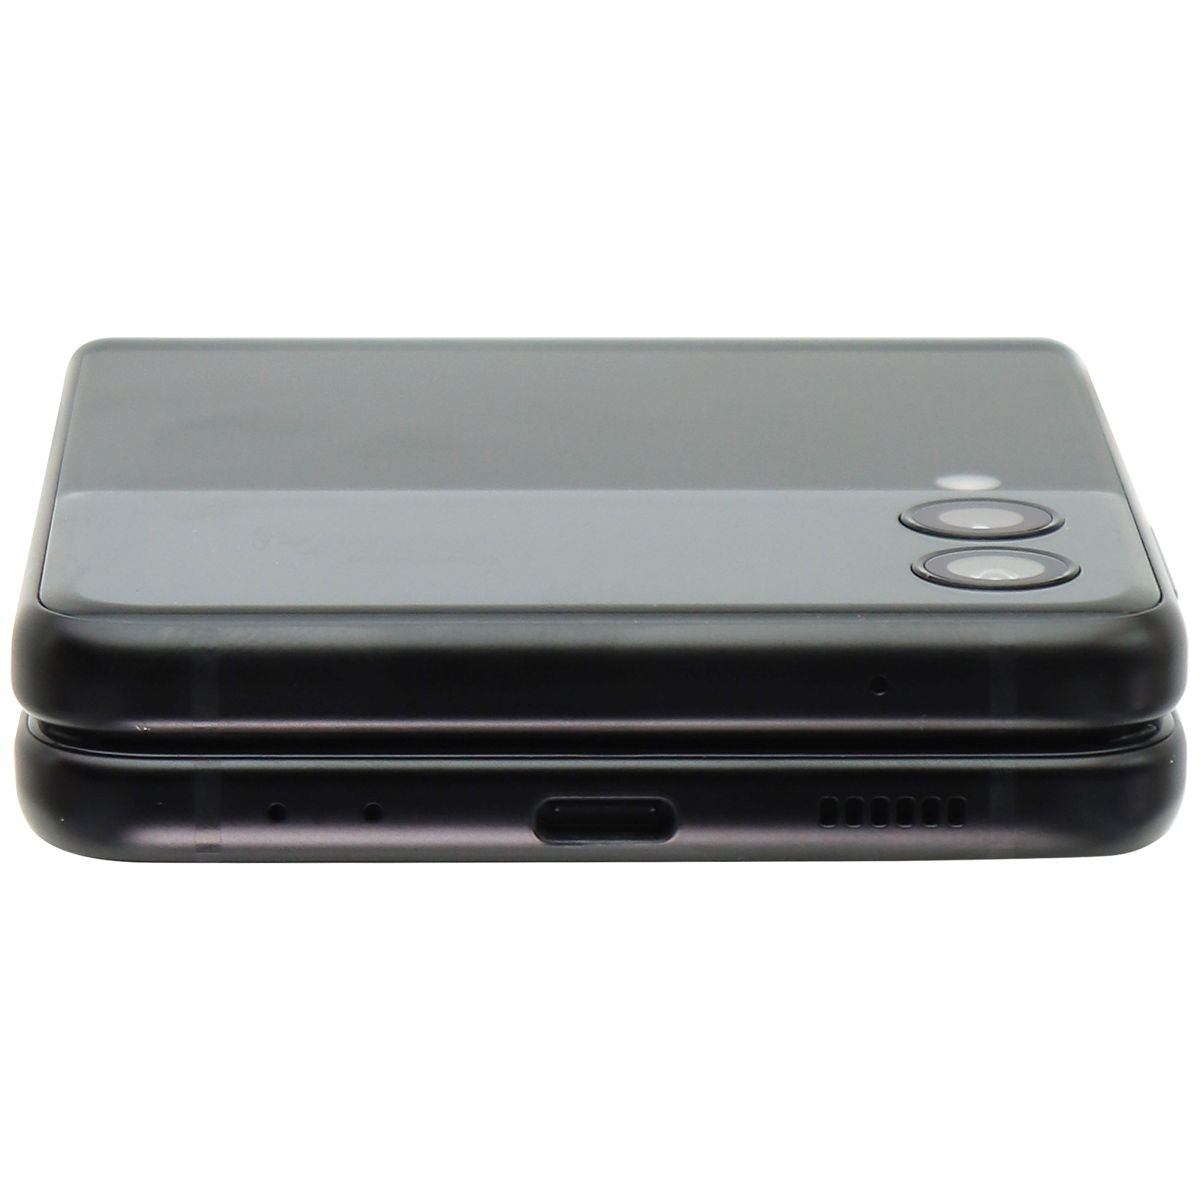 Samsung Galaxy Z Flip3 5G (6.7-inch) SM-F711U (Verizon Only) - 256GB / Black Cell Phones & Smartphones Samsung    - Simple Cell Bulk Wholesale Pricing - USA Seller